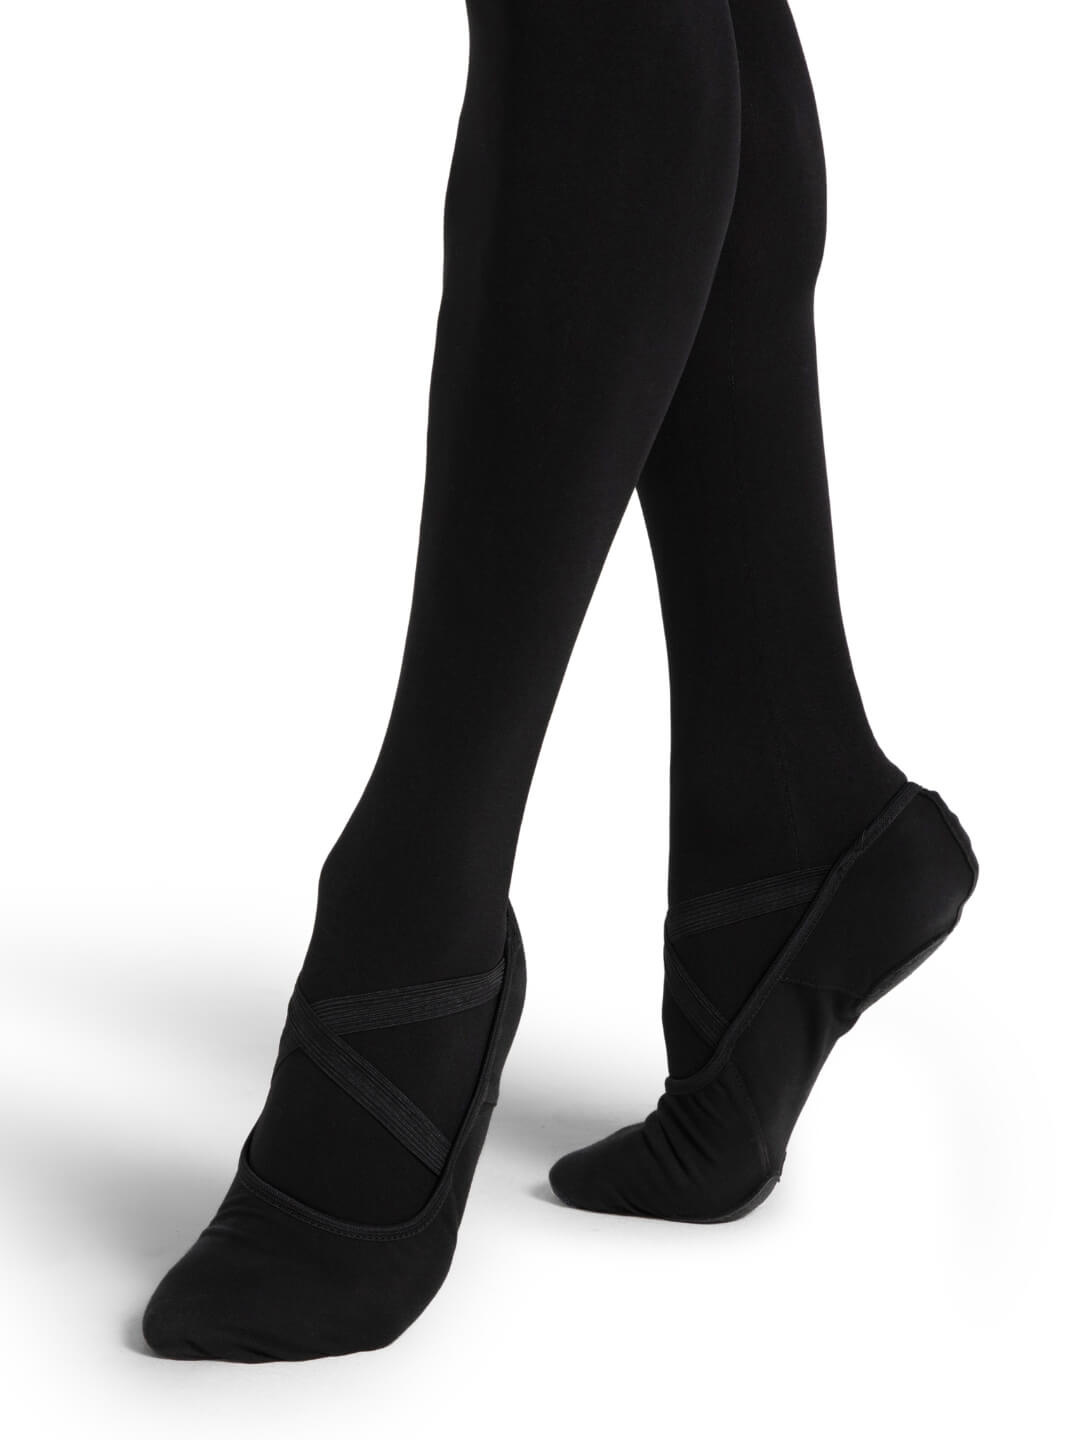 Basic Moves Cotton/Polyester/Spandex Legging Dance Pant, BLACK, Child  Sizes, NWT